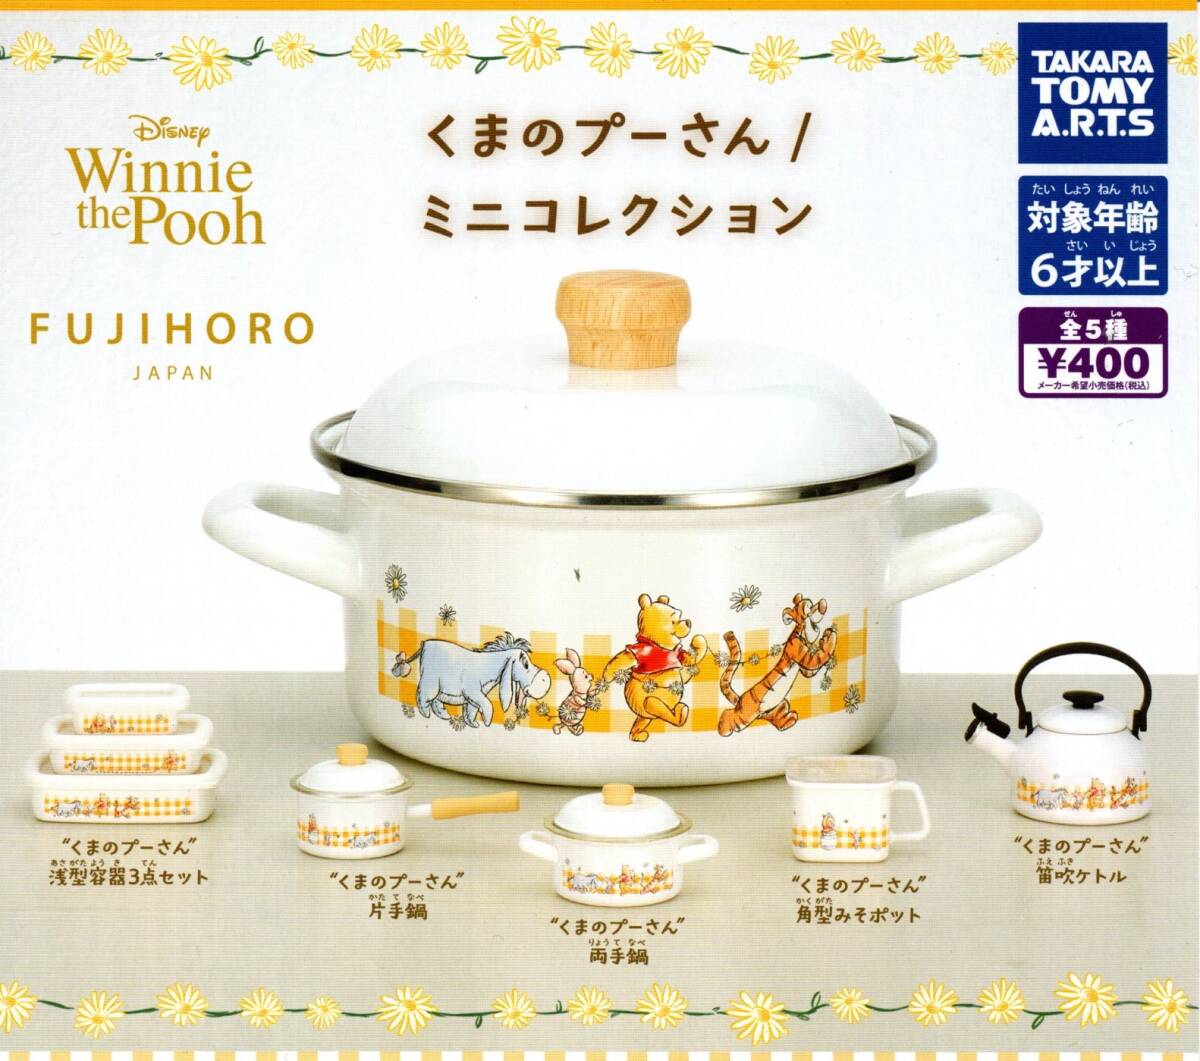 ** быстрое решение!FUJIHORO Винни Пух Mini коллекция все 5 вид стоимость доставки 220 иен ~[ общая сумма 2088 иен ~] Fuji сигнал low / Disney / тигр -/ Иа-Иа / заяц 